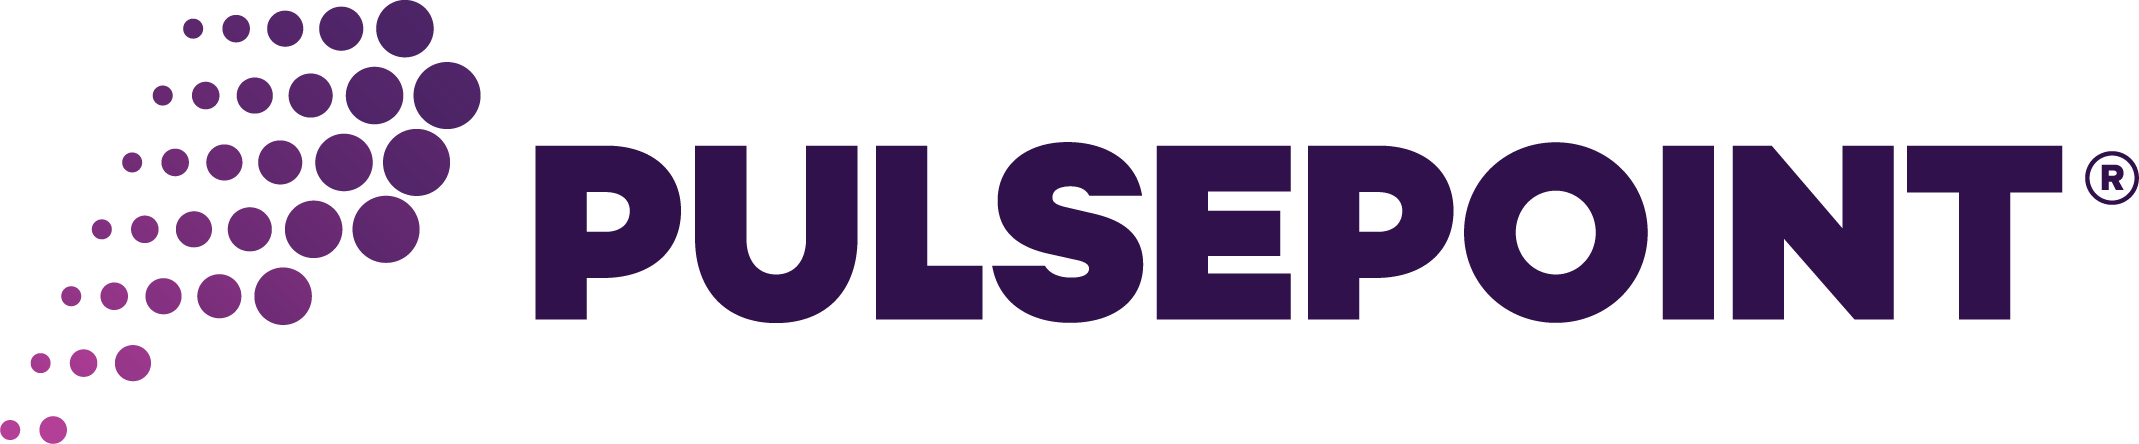 pulsepoint-logo